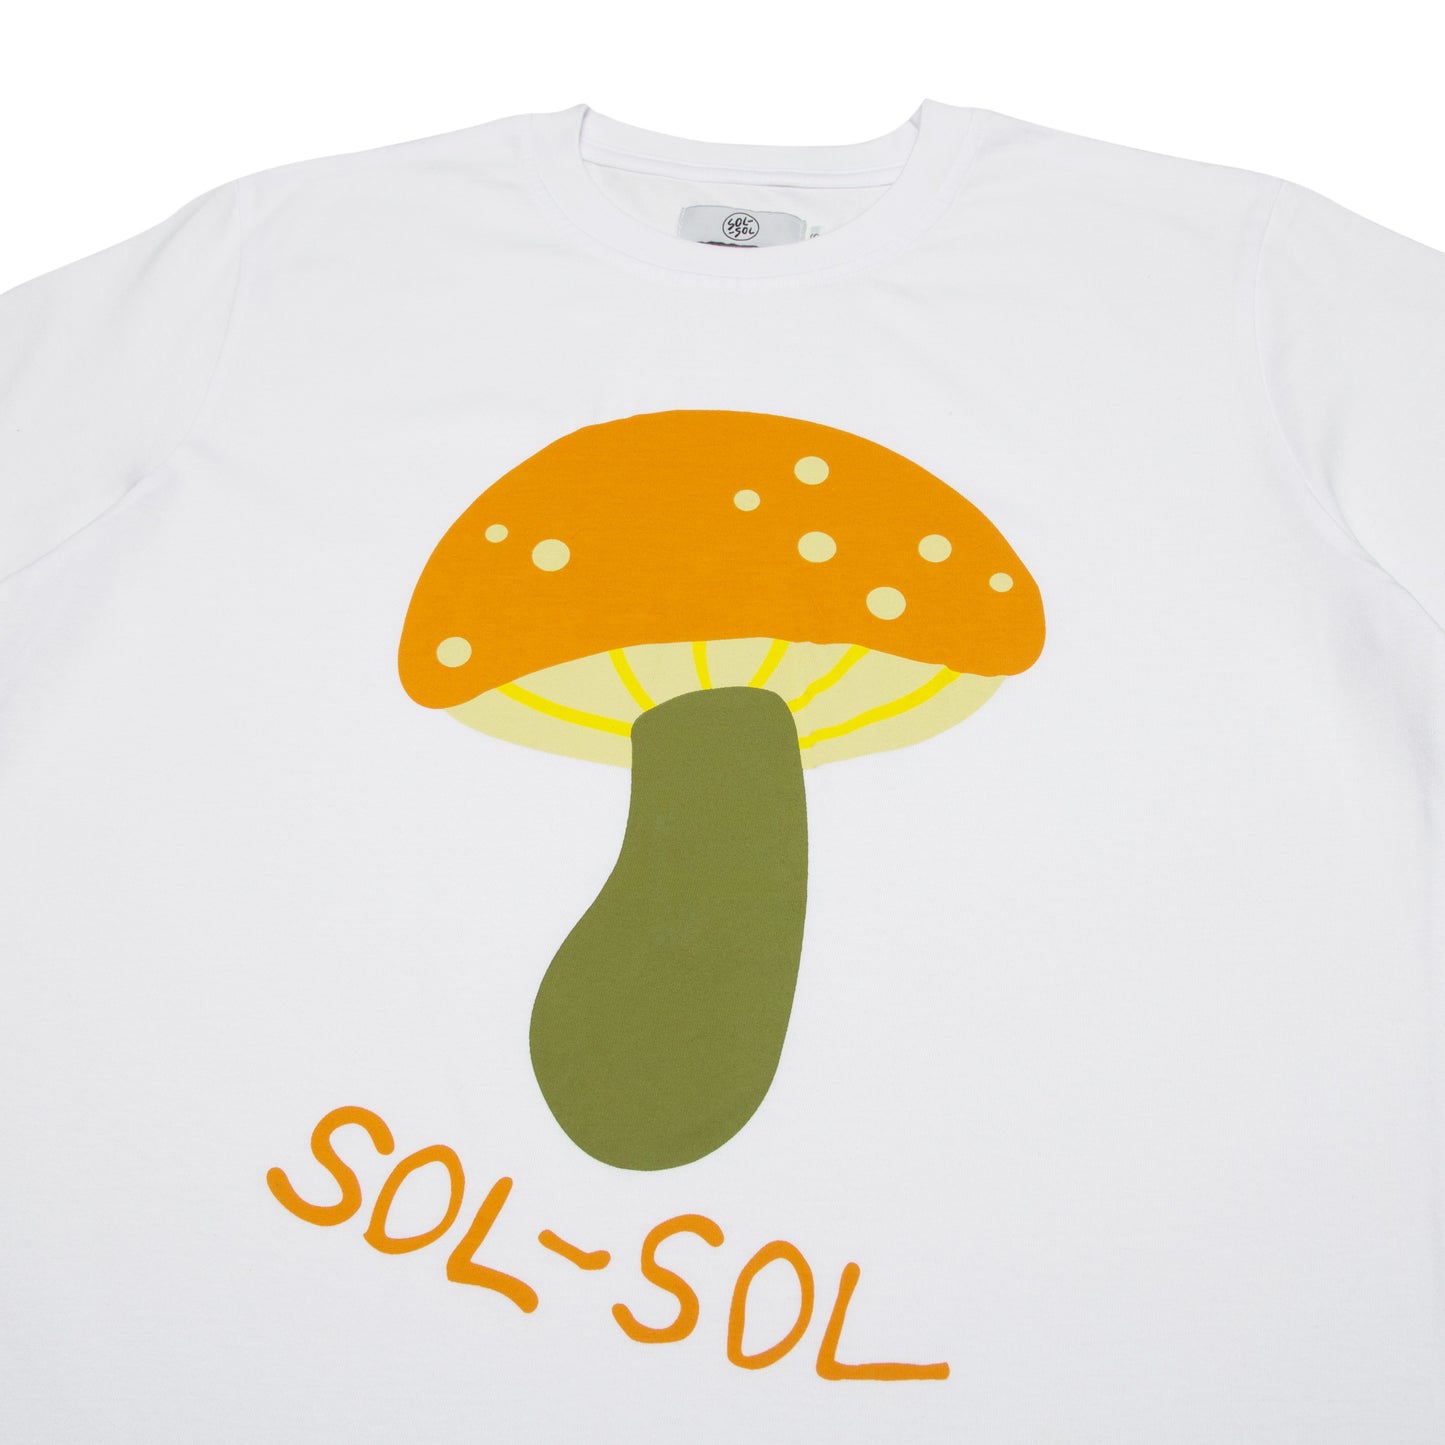 Sol Sol "Garden Mushroom" T-shirt - White